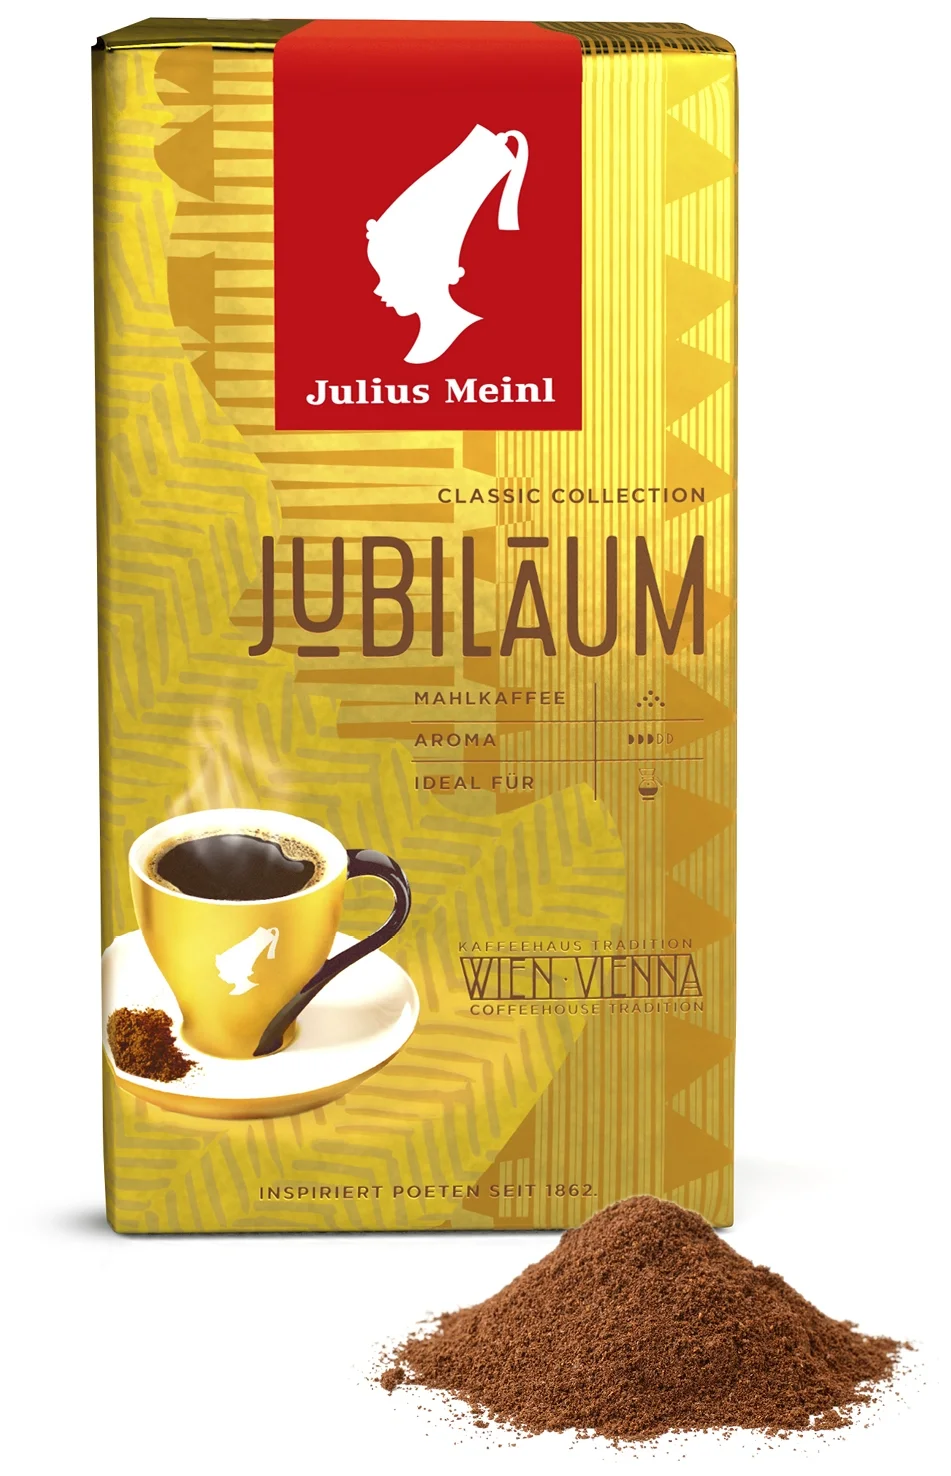 Julius кофе молотый. Кофе молотый Julius Meinl Jubilaum. Кофе молотый Julius Meinl Юбилейный. Джулиус Майнл Юбилейный молотый. Кофе марки молотое Julius Meinl.